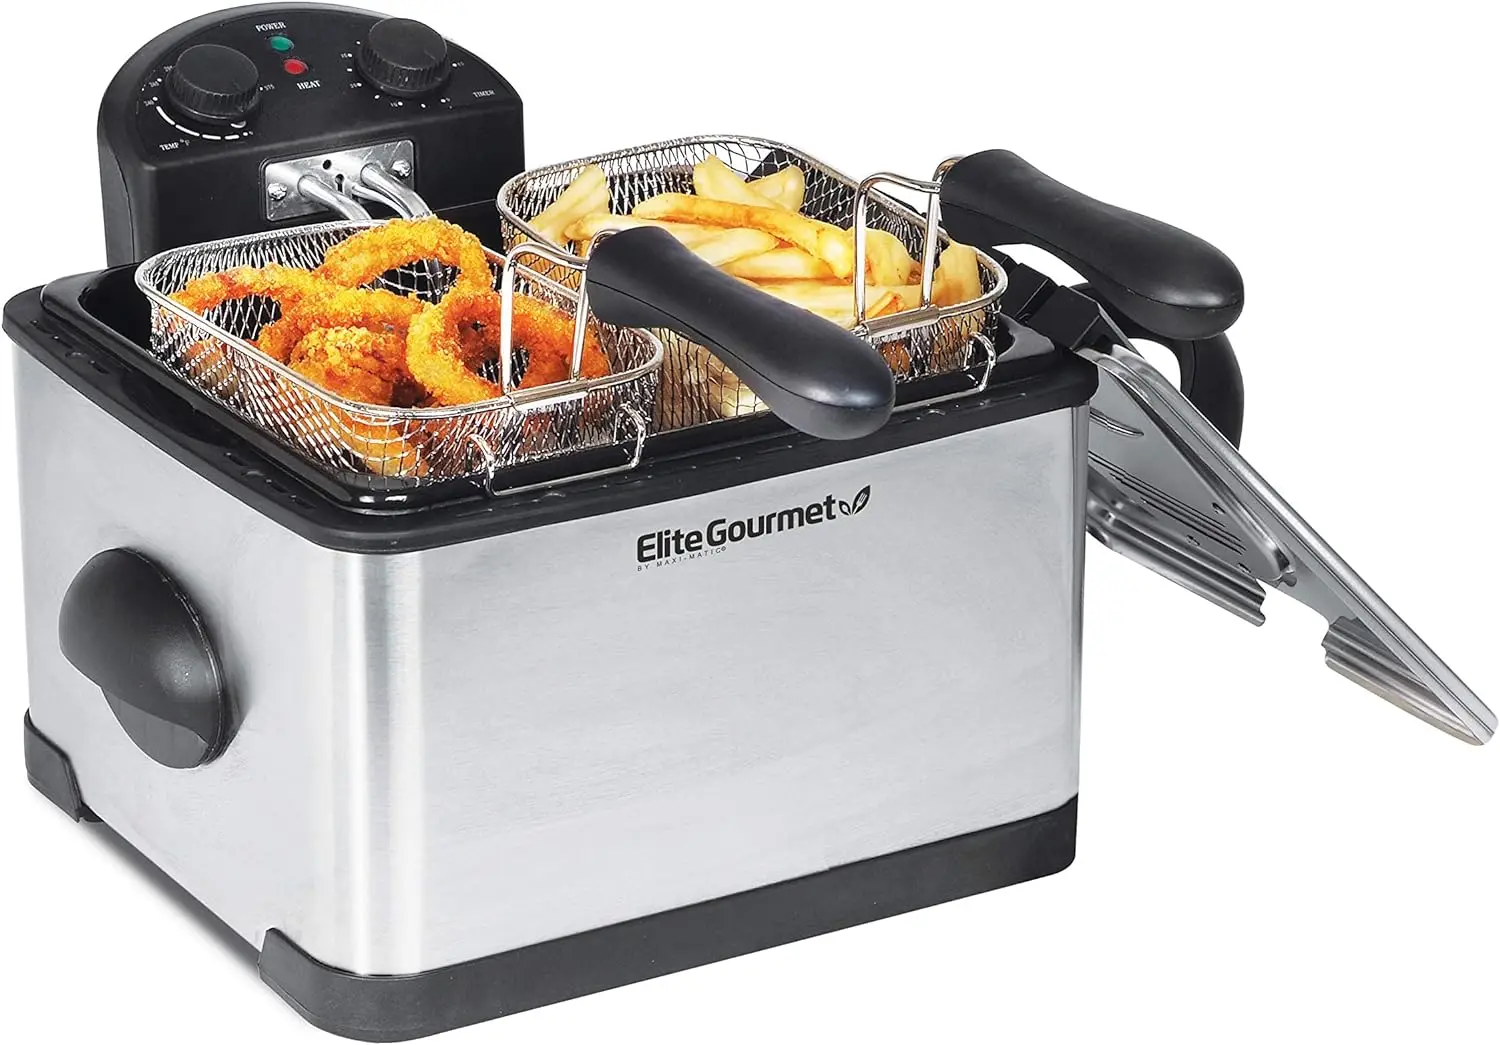 

Elite Gourmet EDF-401T Electric Immersion Deep Fryer 3-Baskets, 1700-Watt, Timer Control, Adjustable Temperature